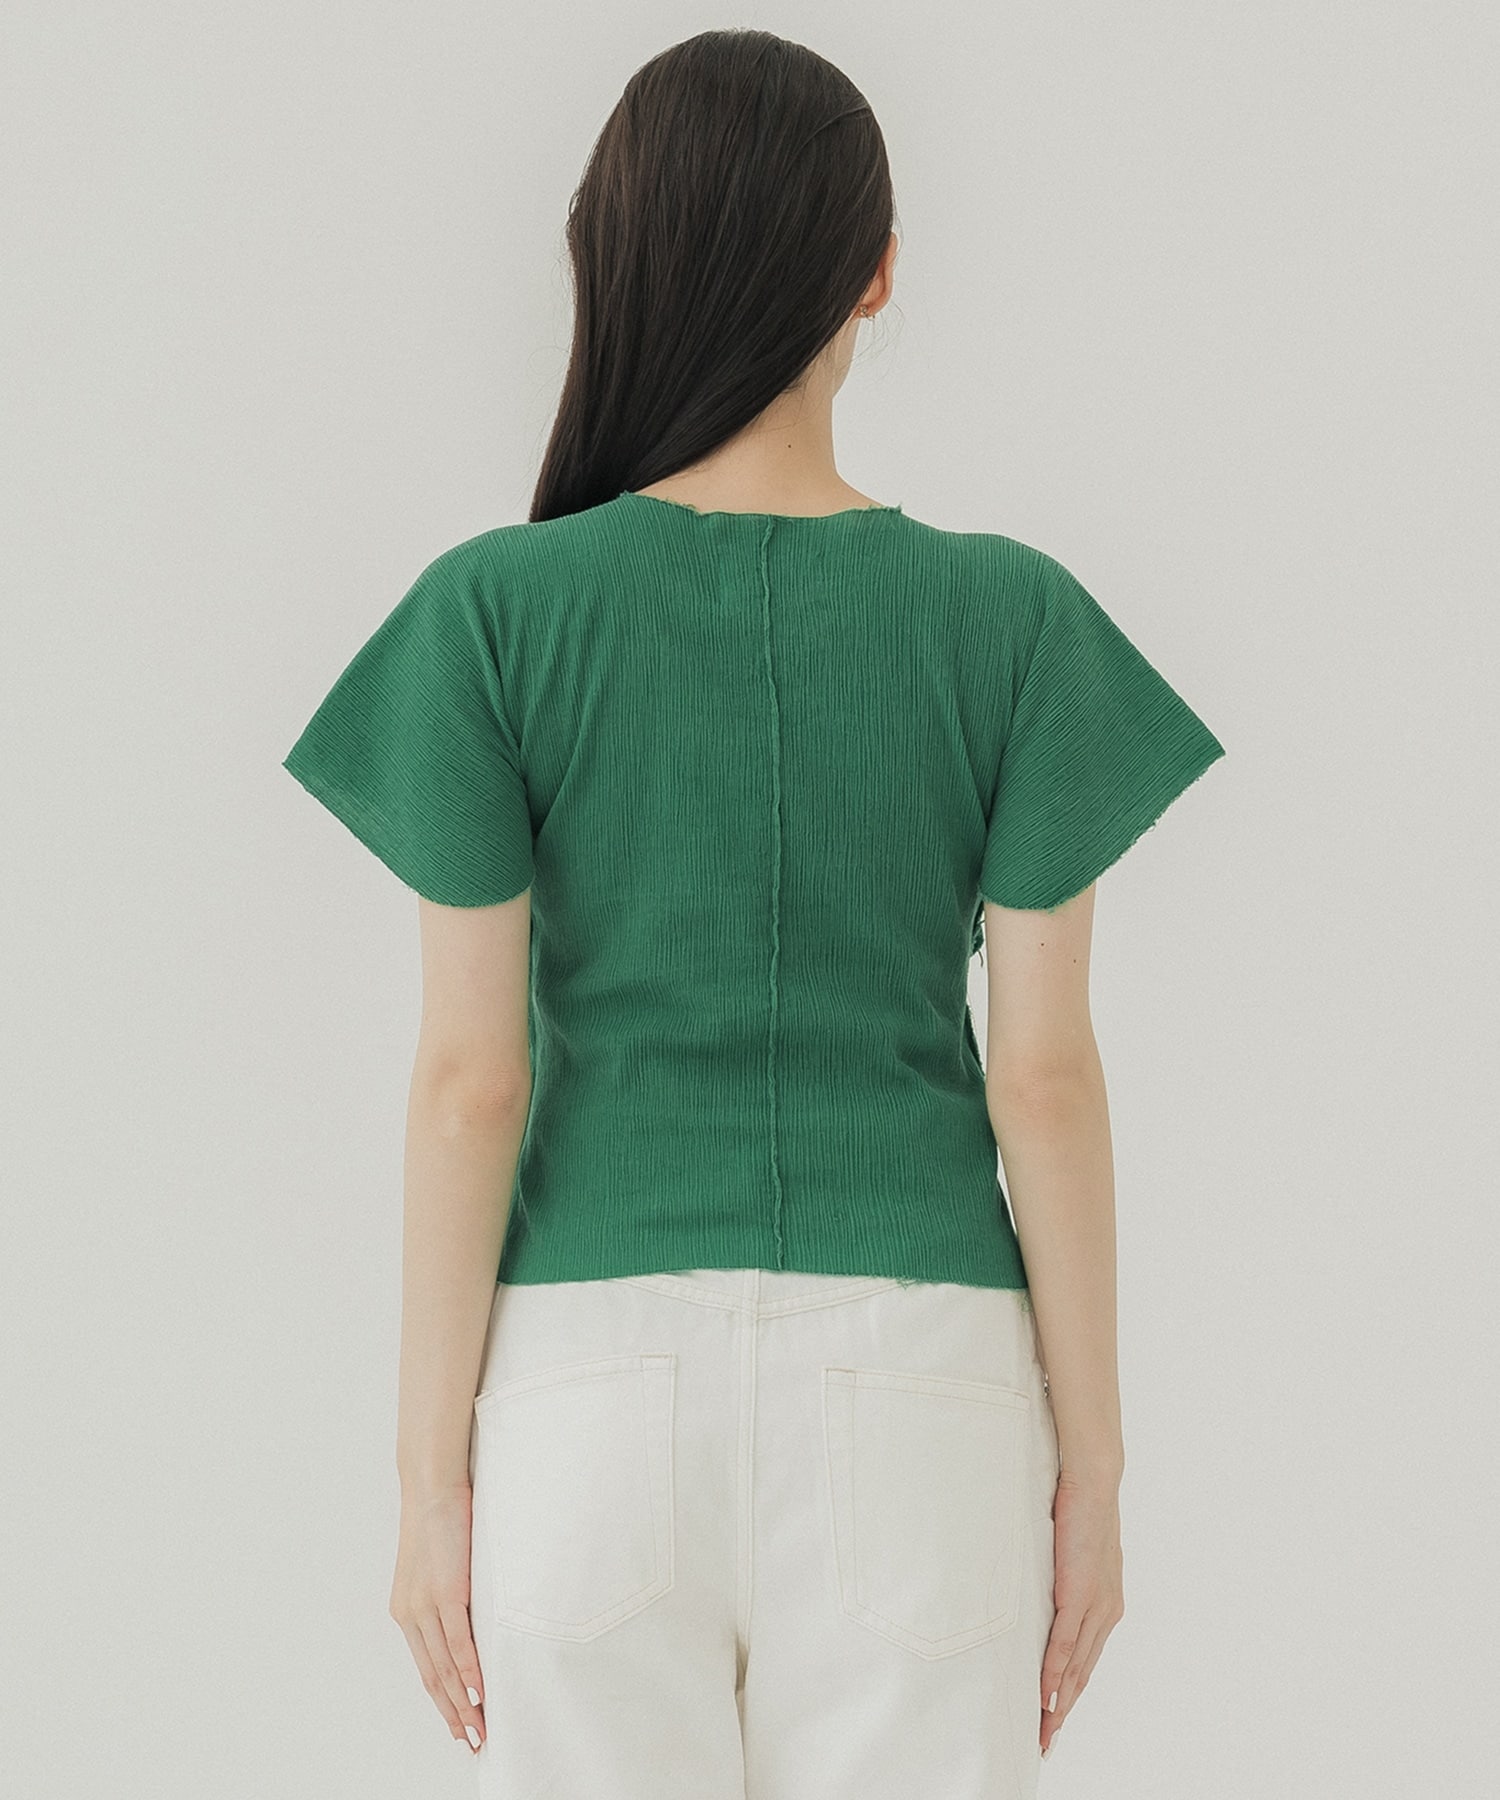 Cotton yoryu short sleeve(FREE GREEN): kotohayokozawa: WOMENS 